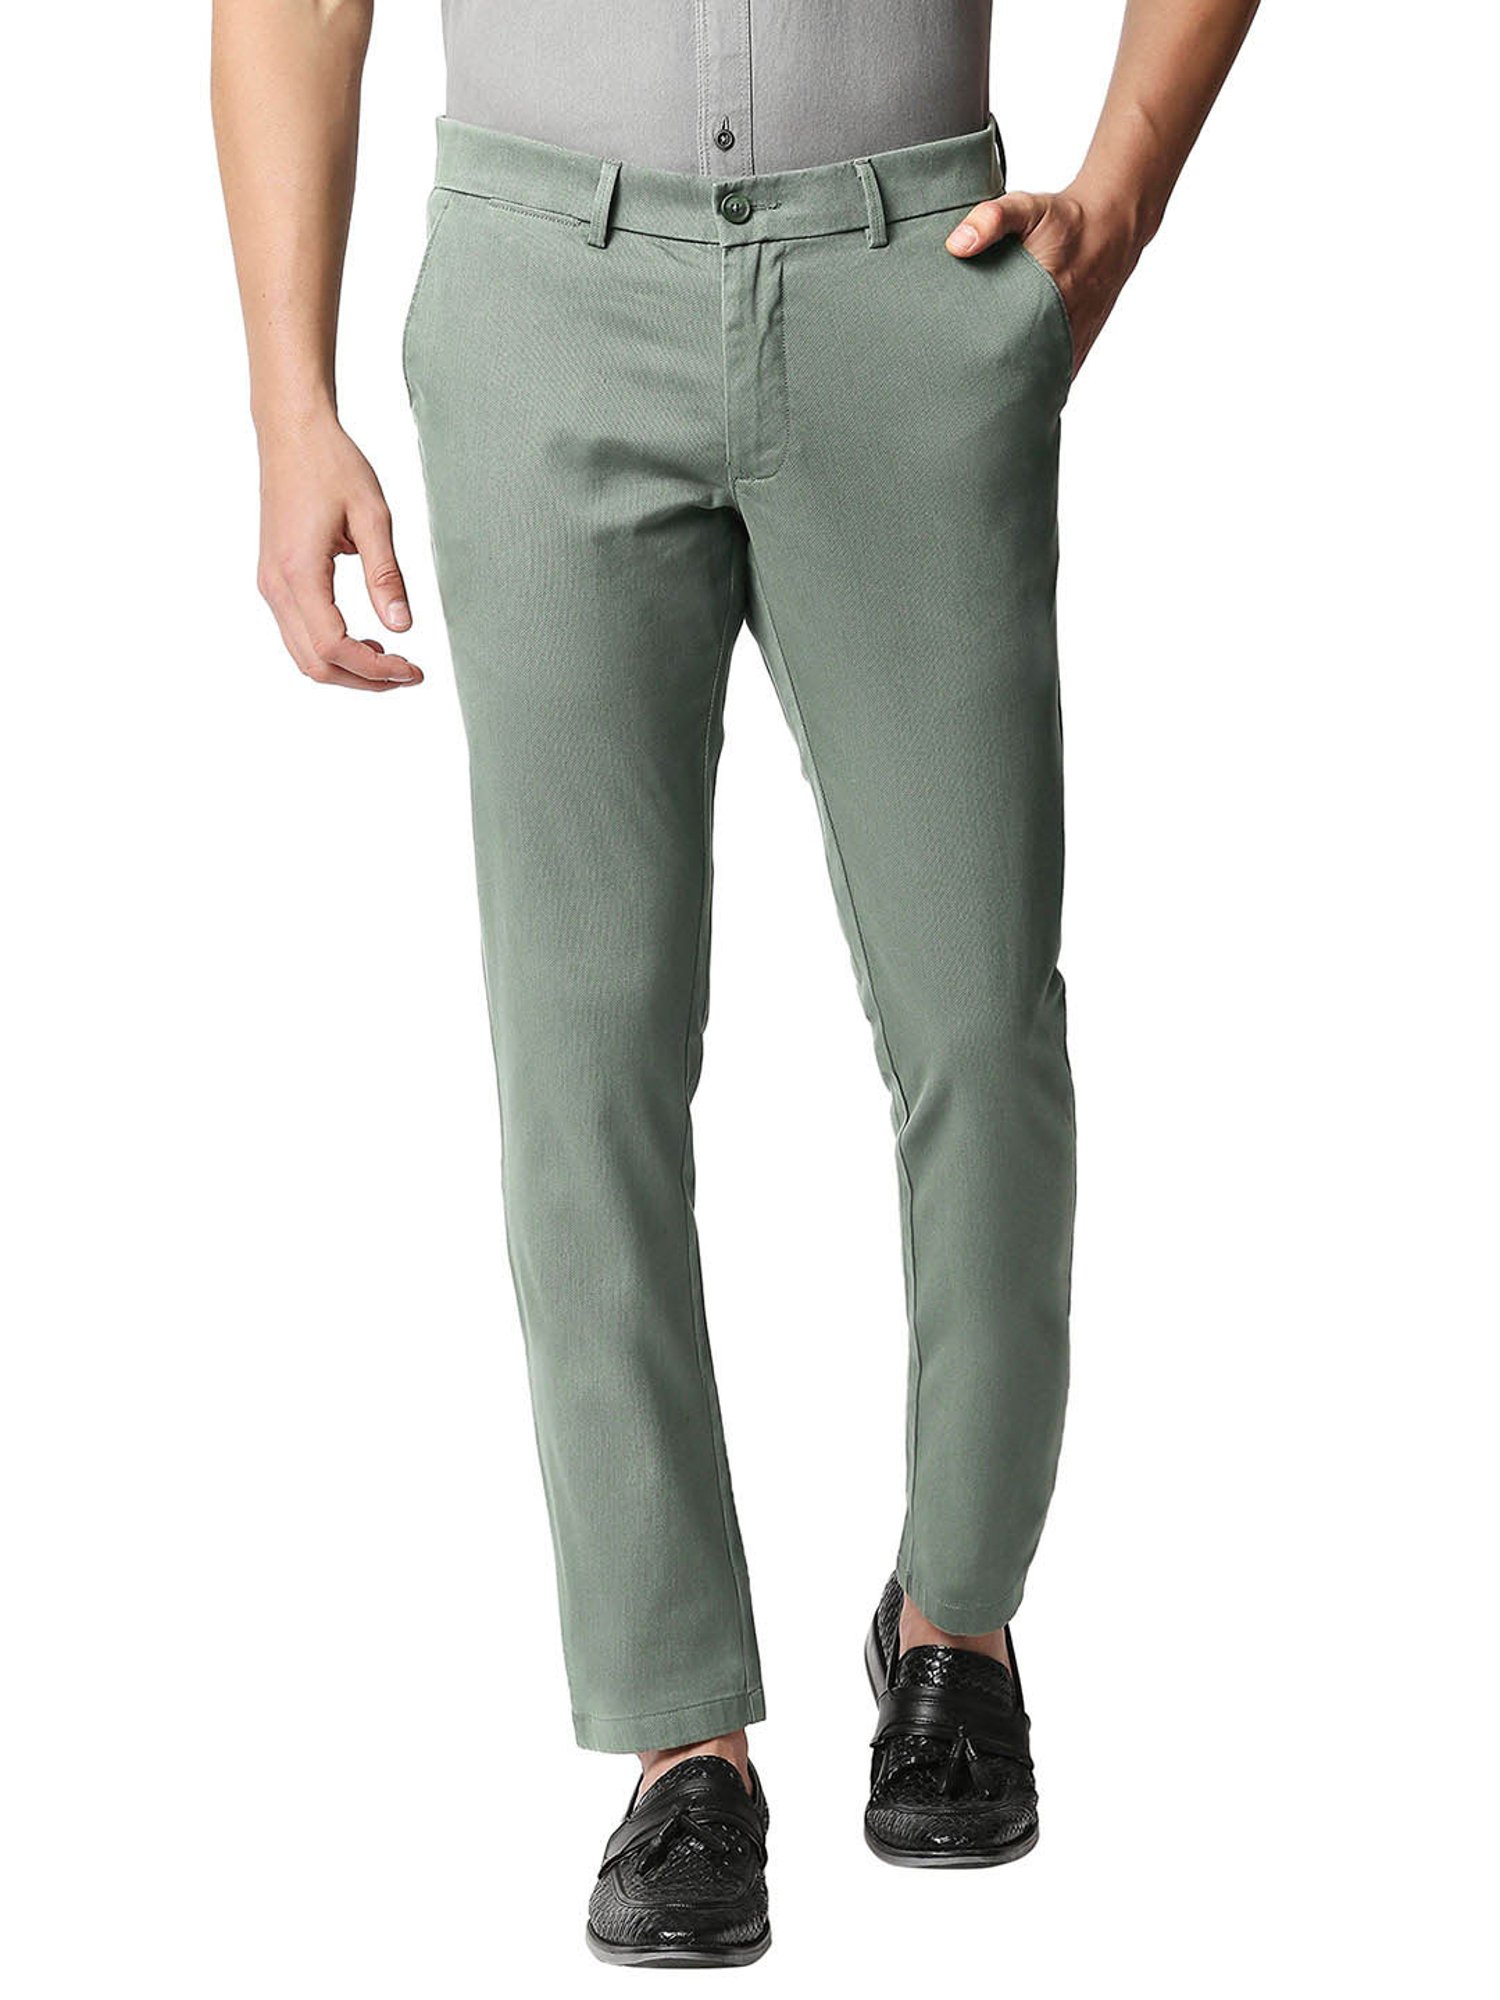 BASICS Casual Trousers  Buy BASICS Khaki Printed Casual Trouser Online   Nykaa Fashion